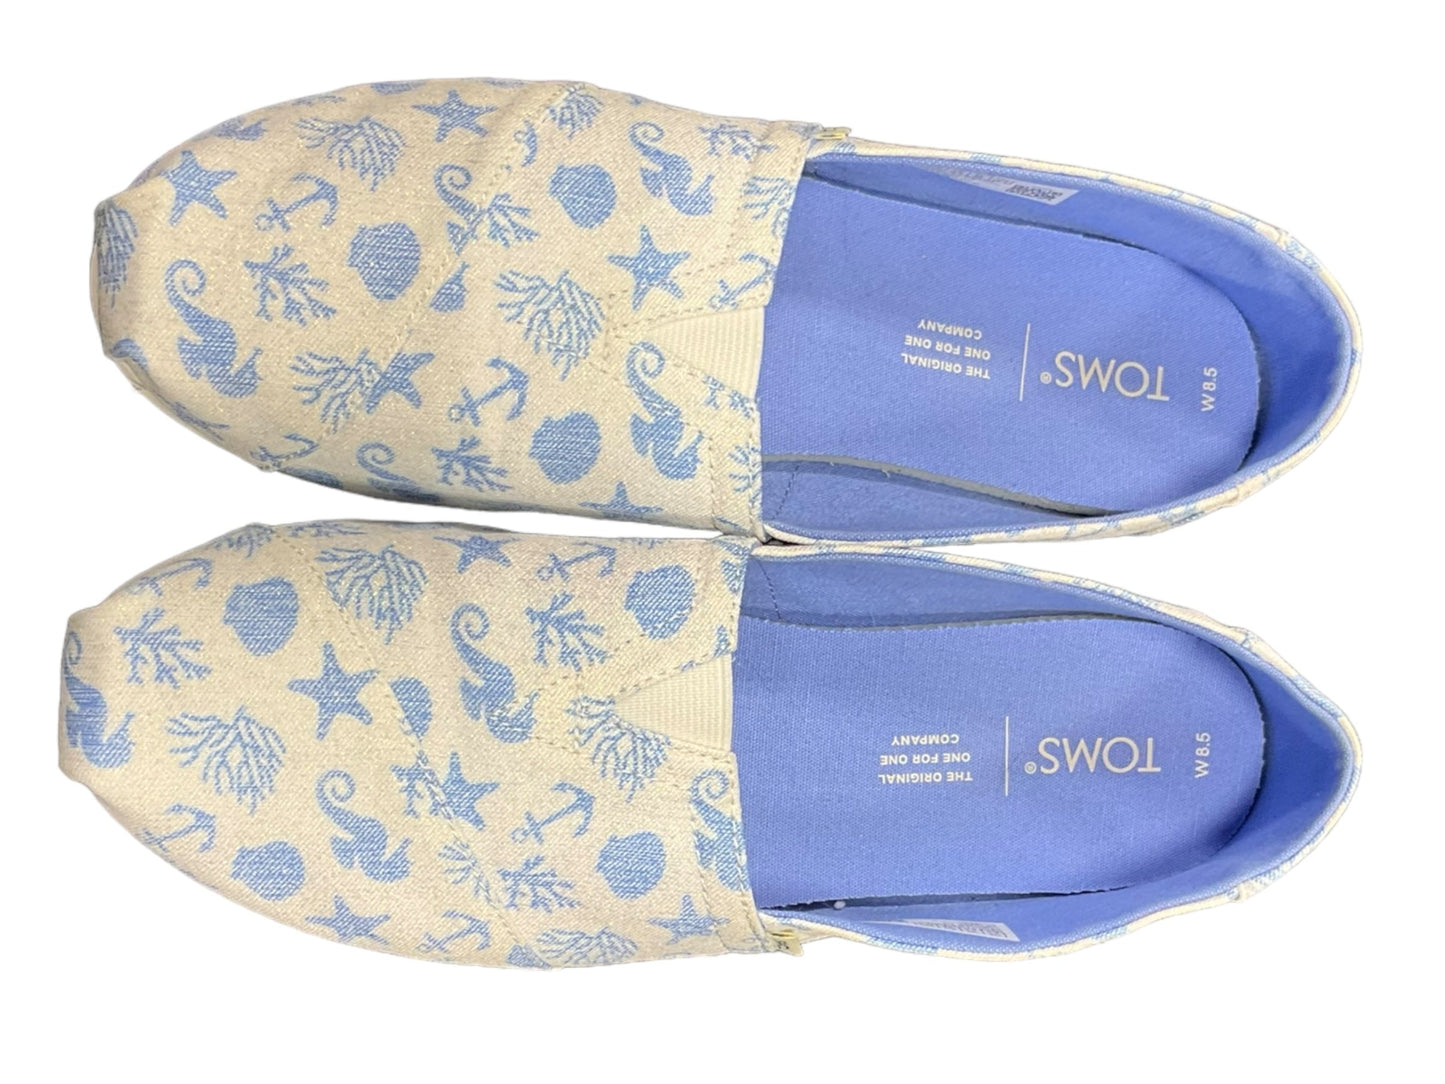 Blue & White Shoes Flats Toms, Size 8.5